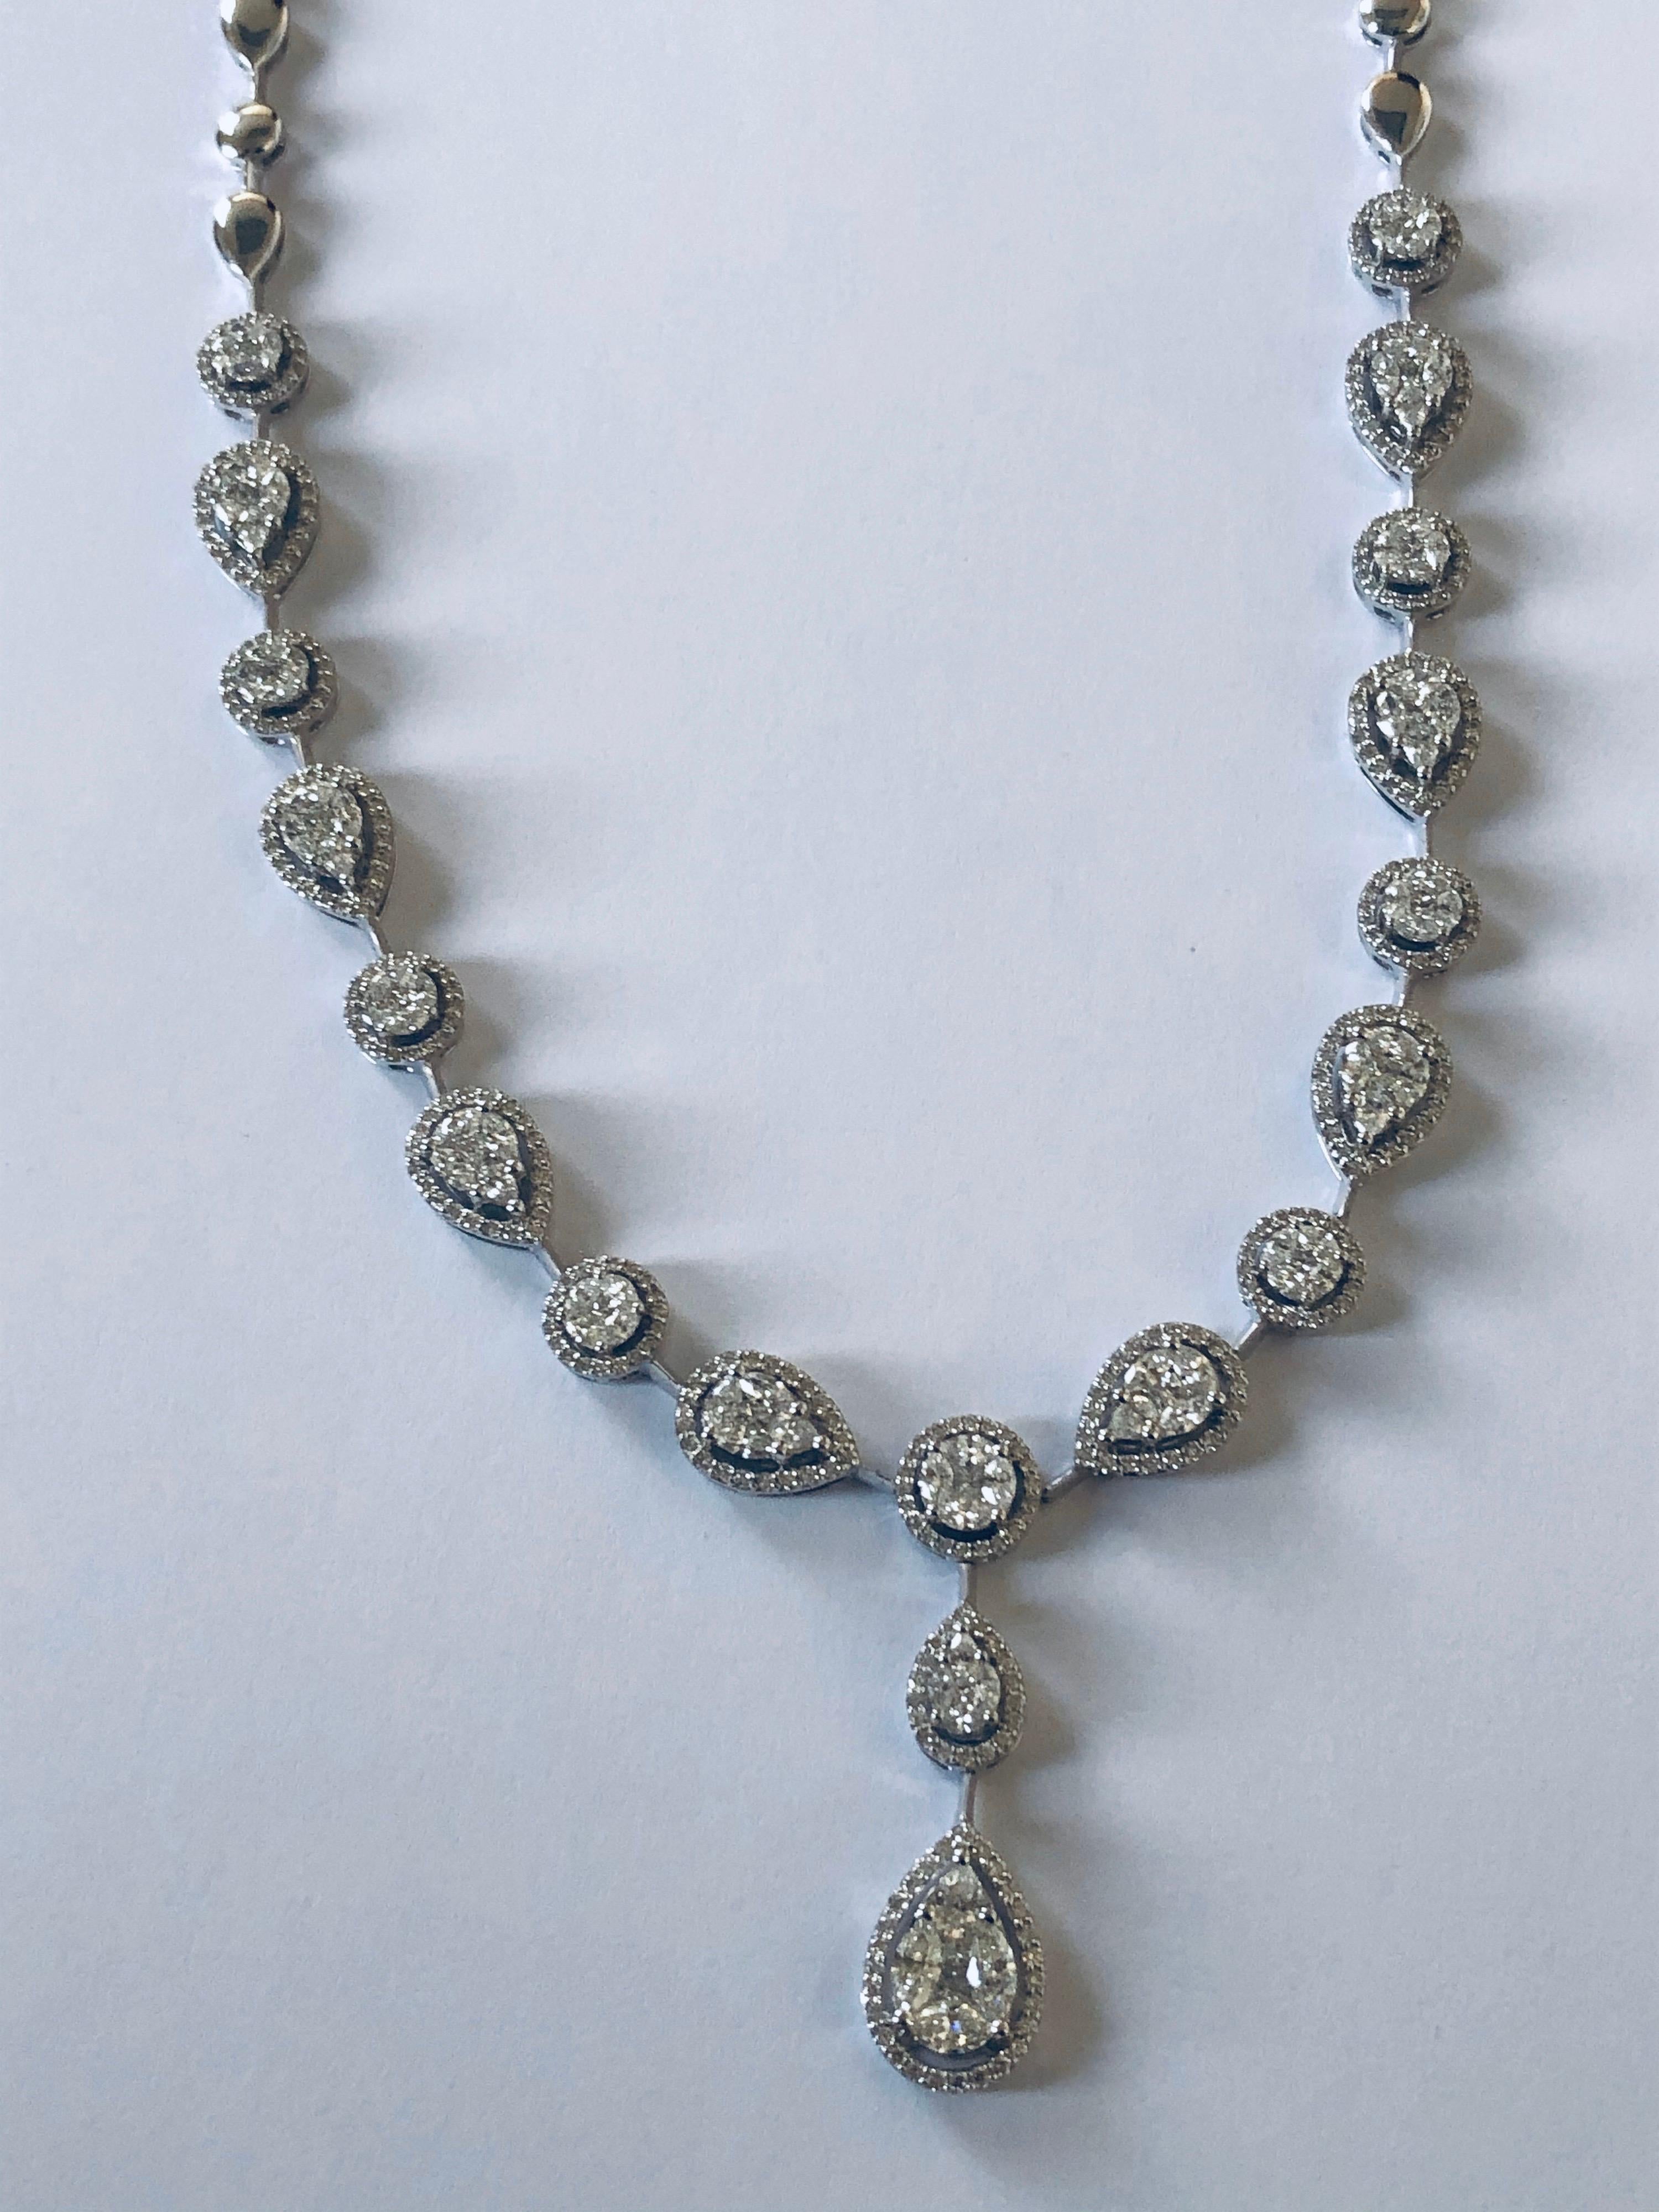 9 diamond necklace